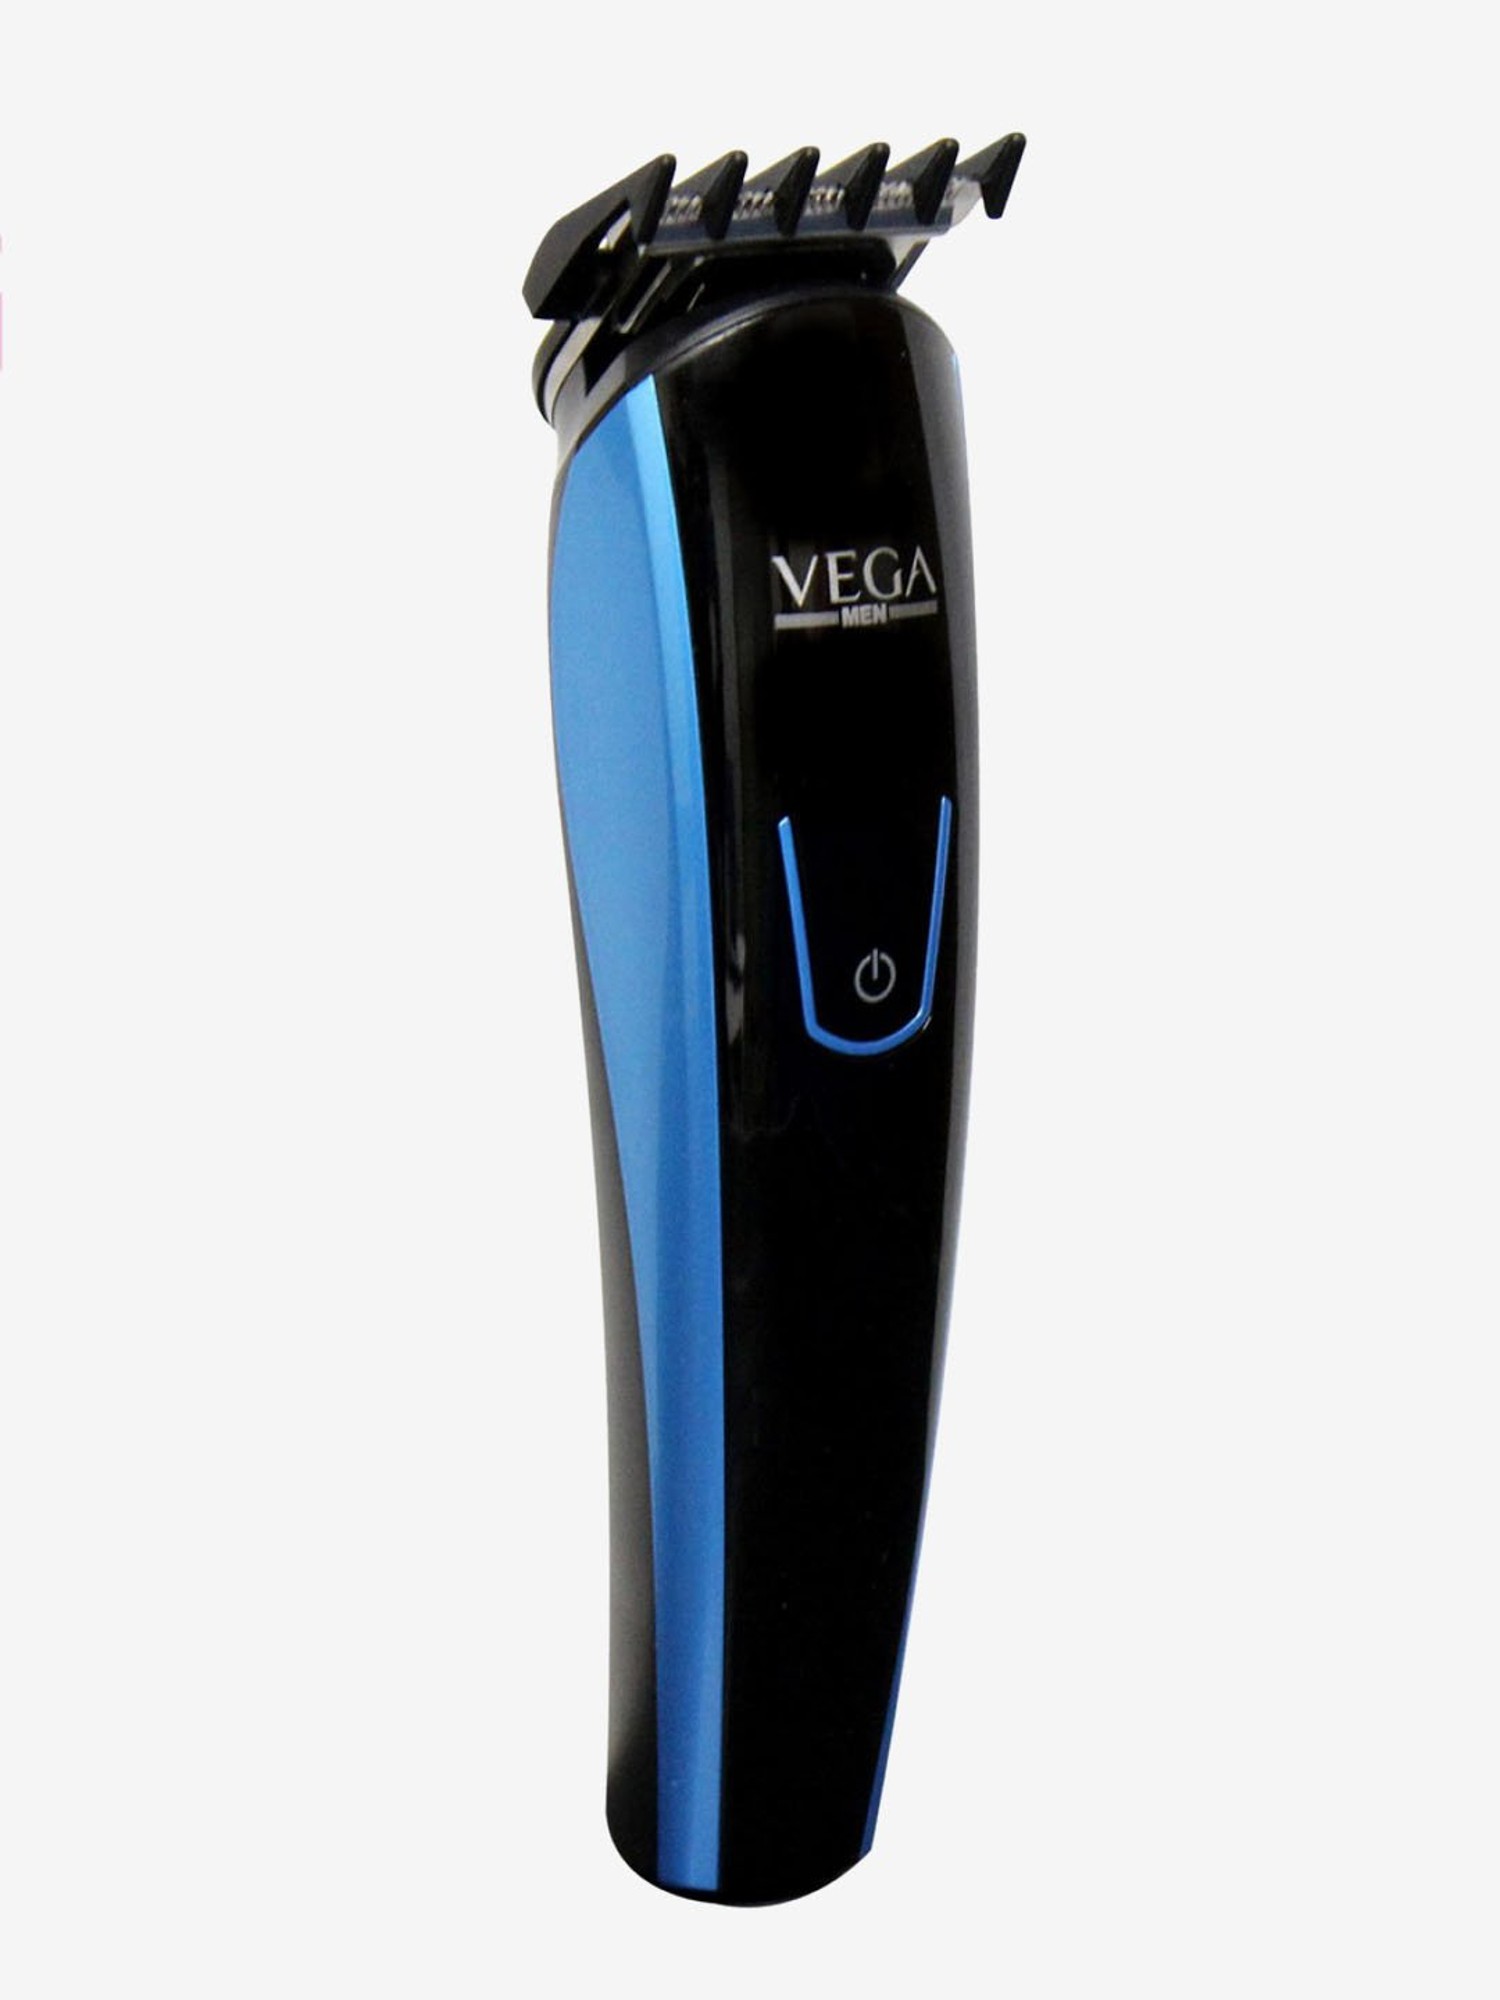 vega hair cutting machine